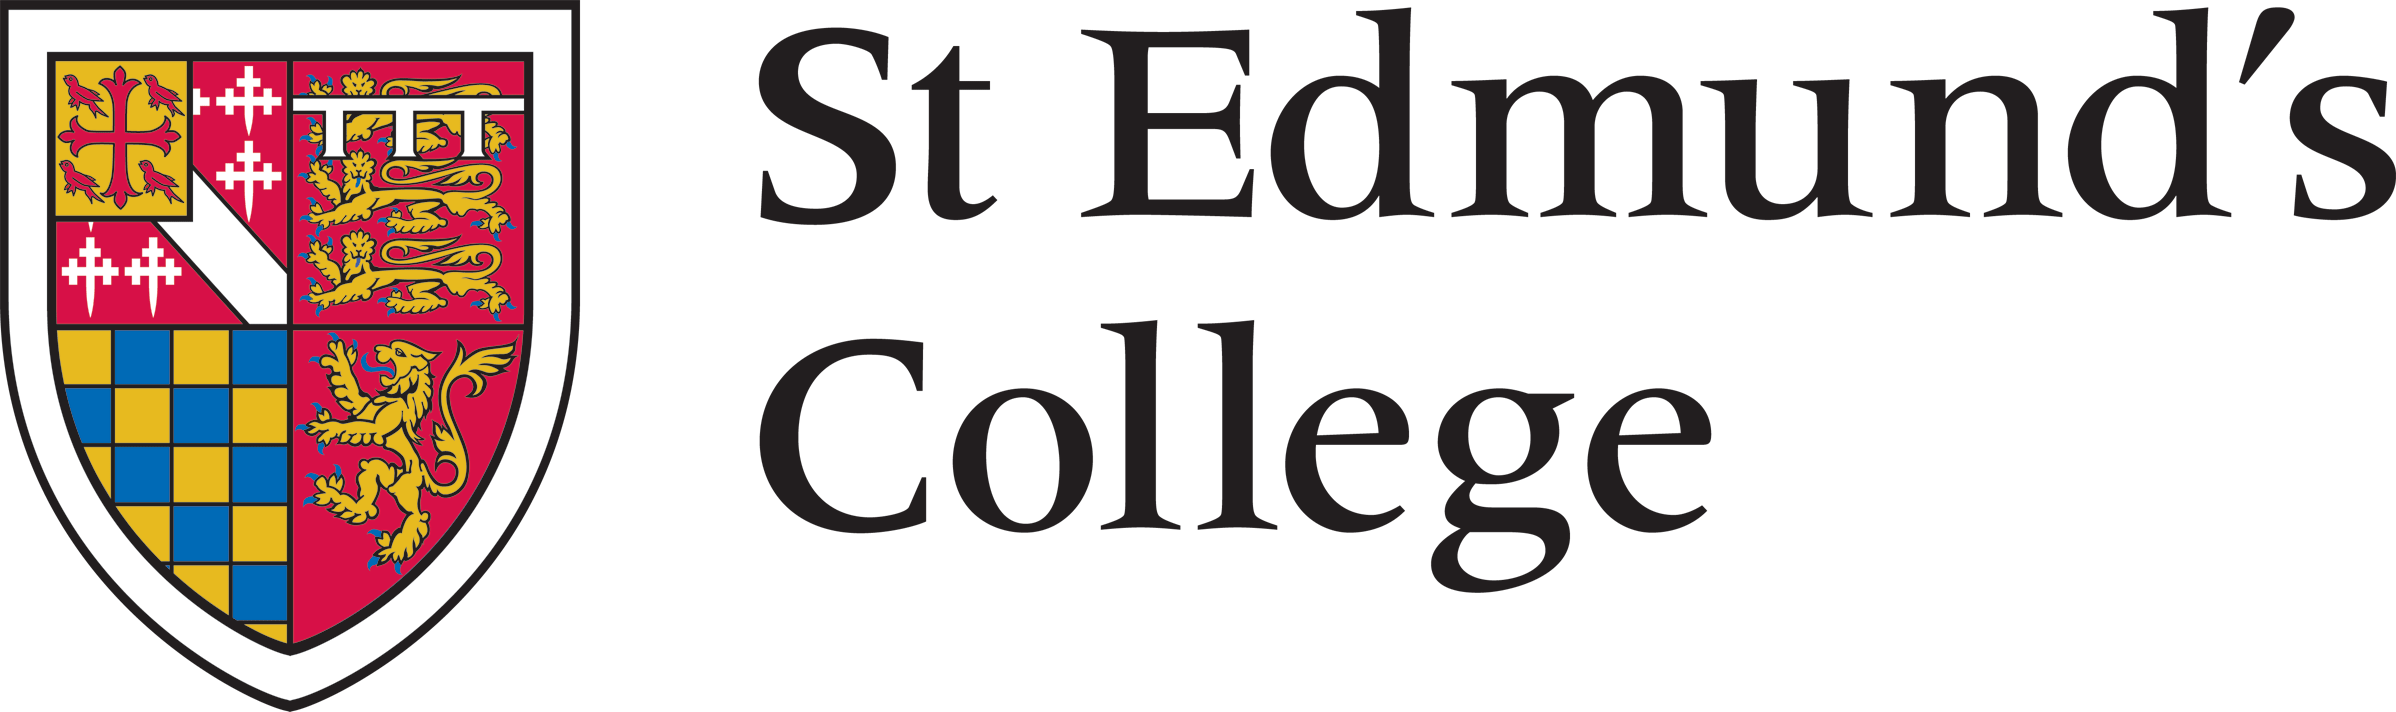 St Edmunds logo